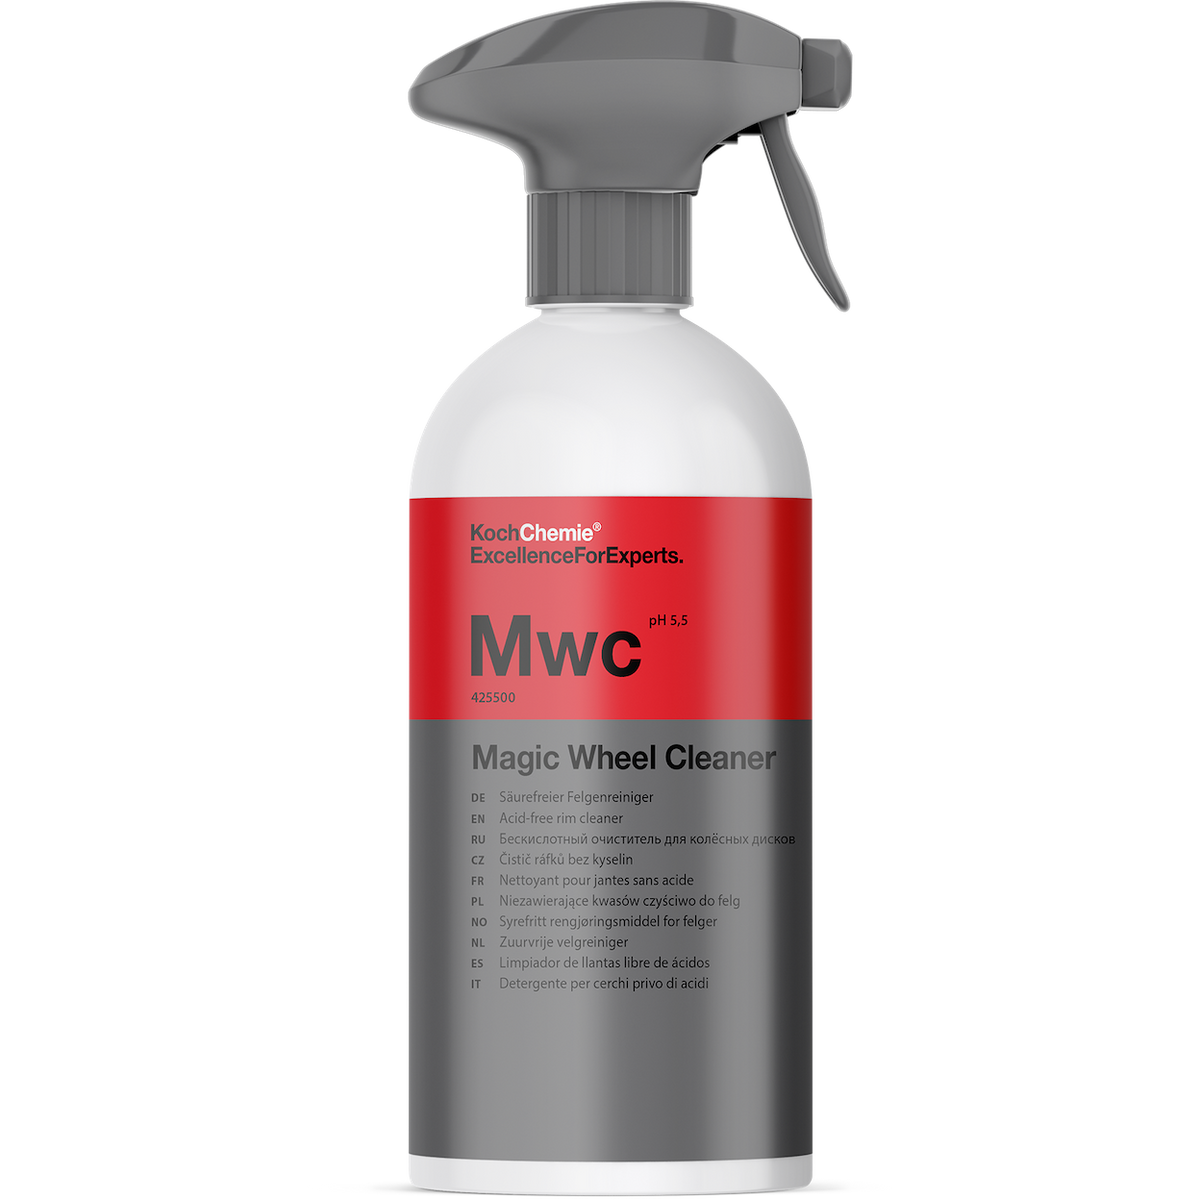 KOCH CHEMIE MWC MAGIC WHEEL CLEANER 500ML. – Auto Detail Supply Pros